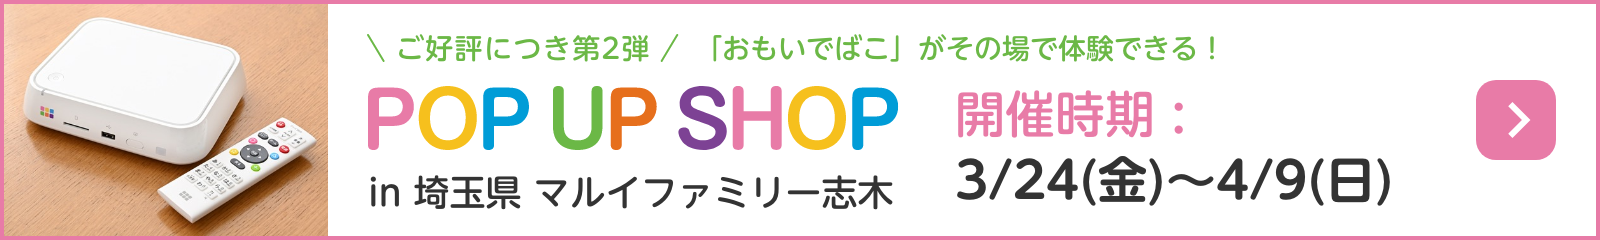 POP UP SHOP in 埼玉県 マルイファミリー志木